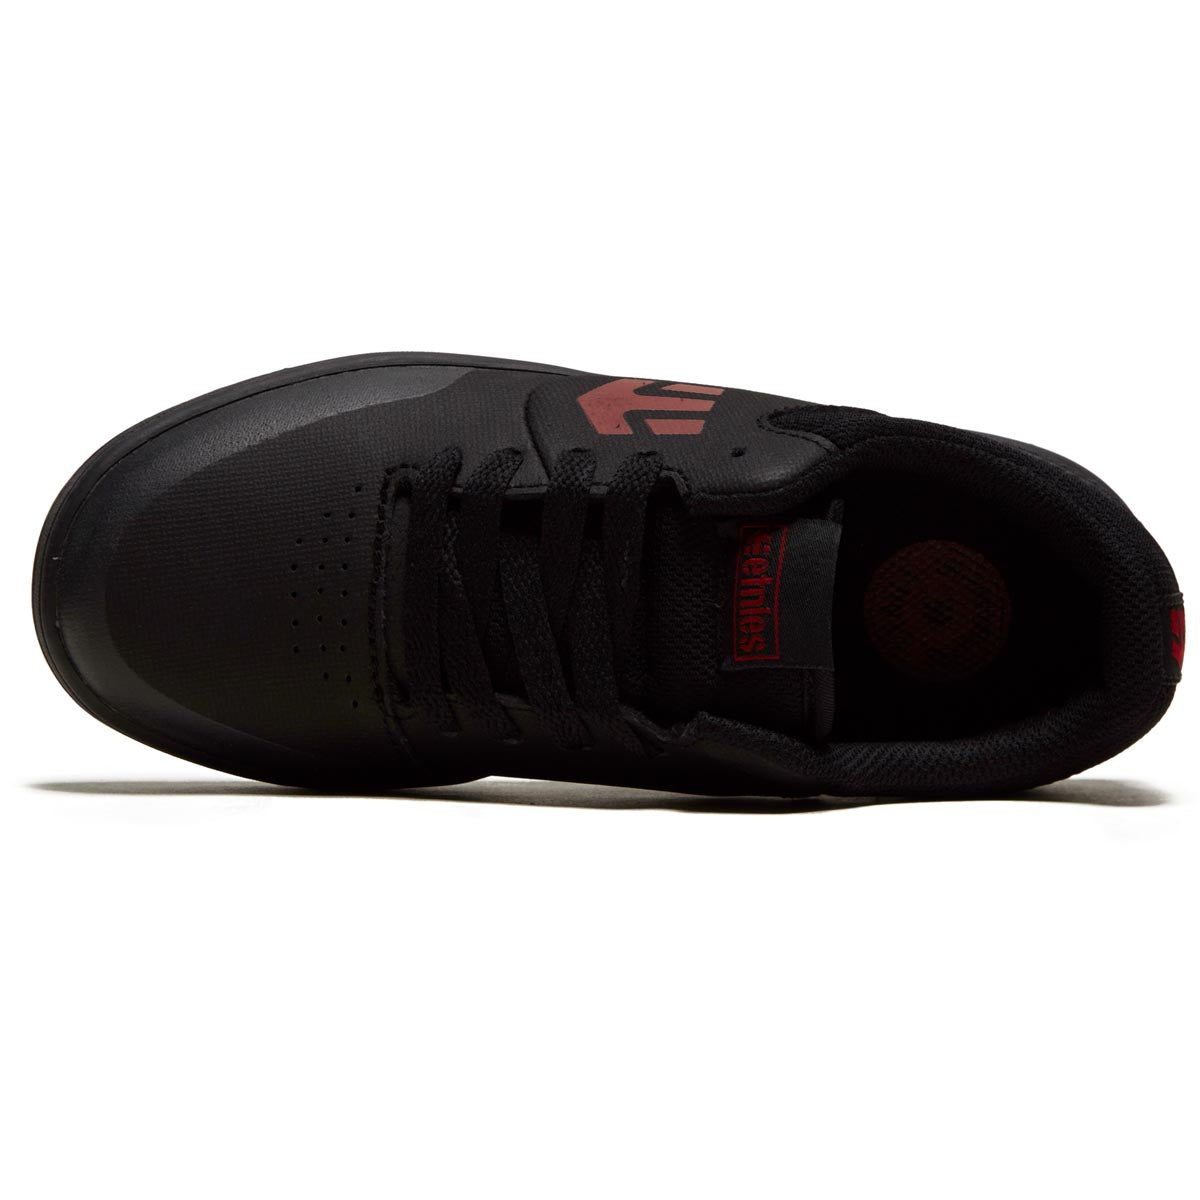 Etnies Youth Marana Shoes - Black/Red/Black image 3